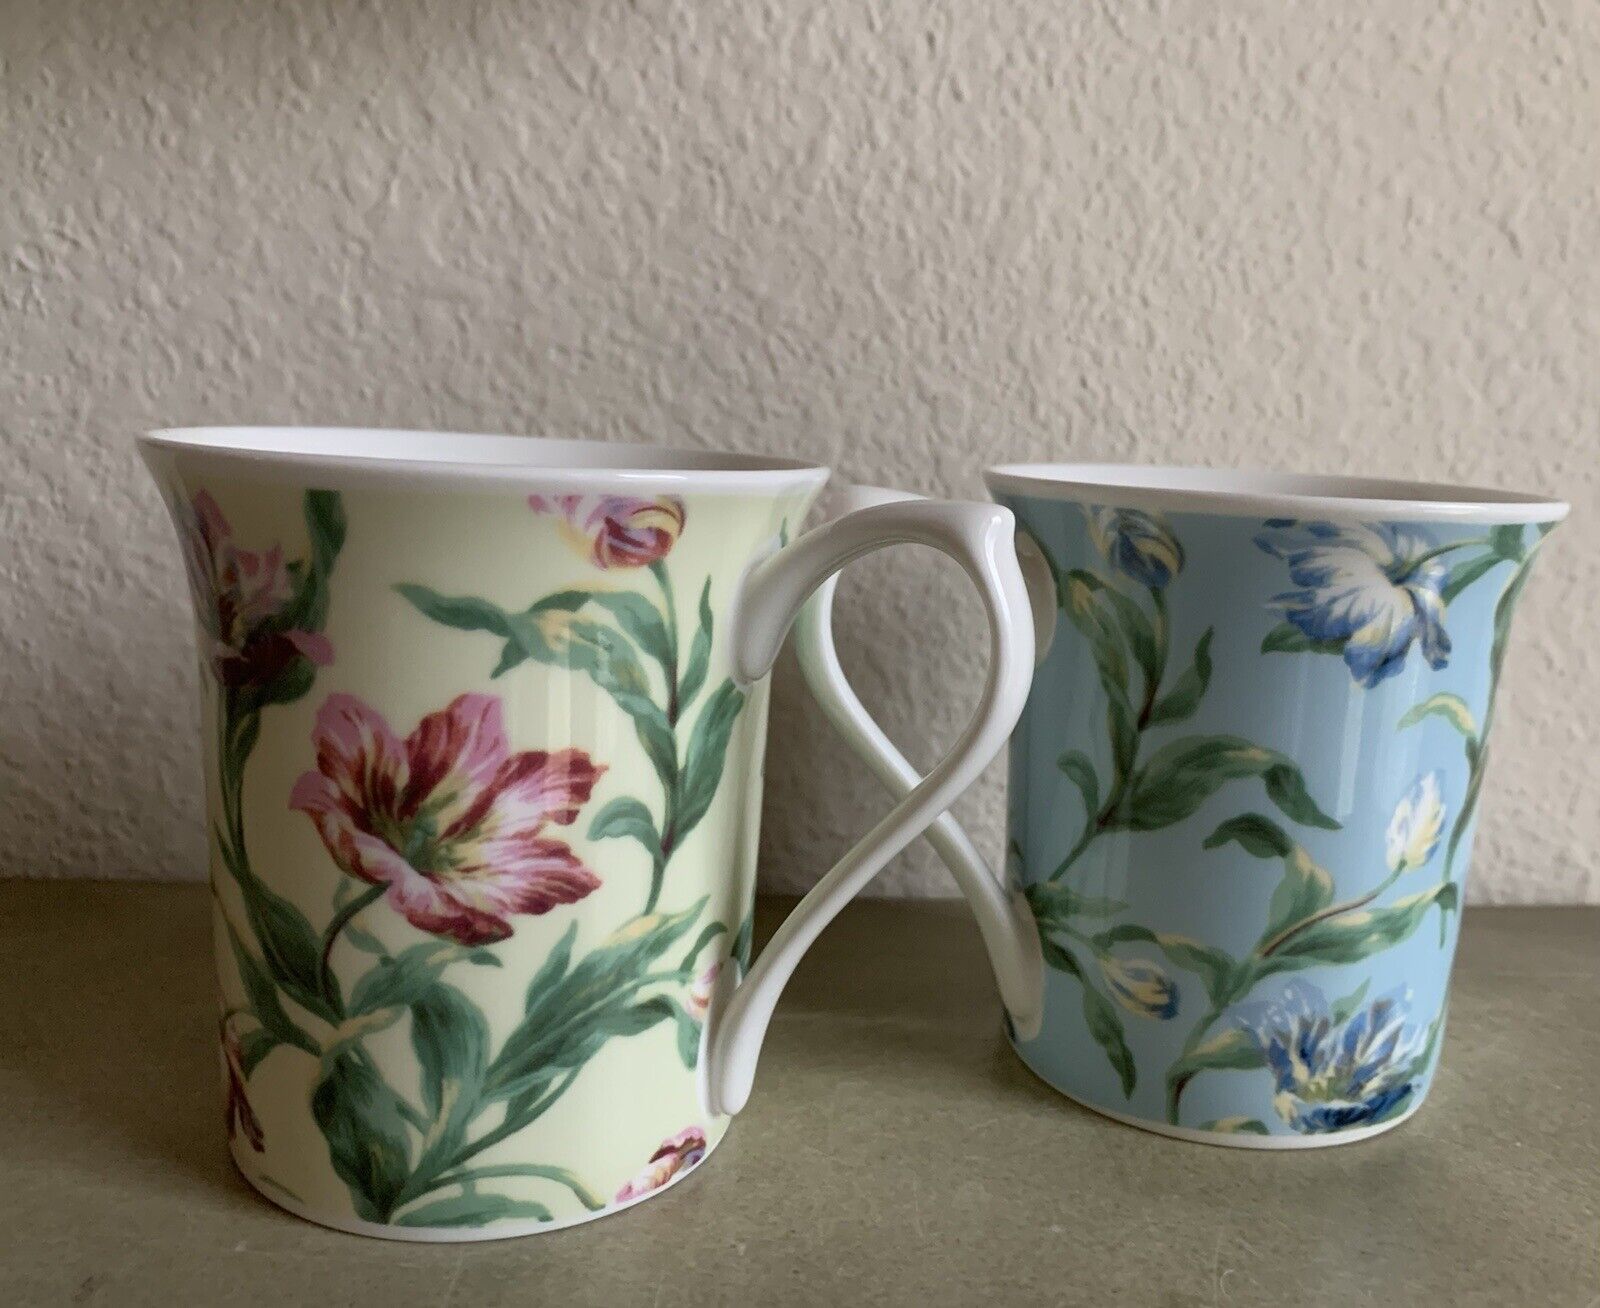 Queen’s Fine Bone China Coffee Tea Mug Cup Set Floral